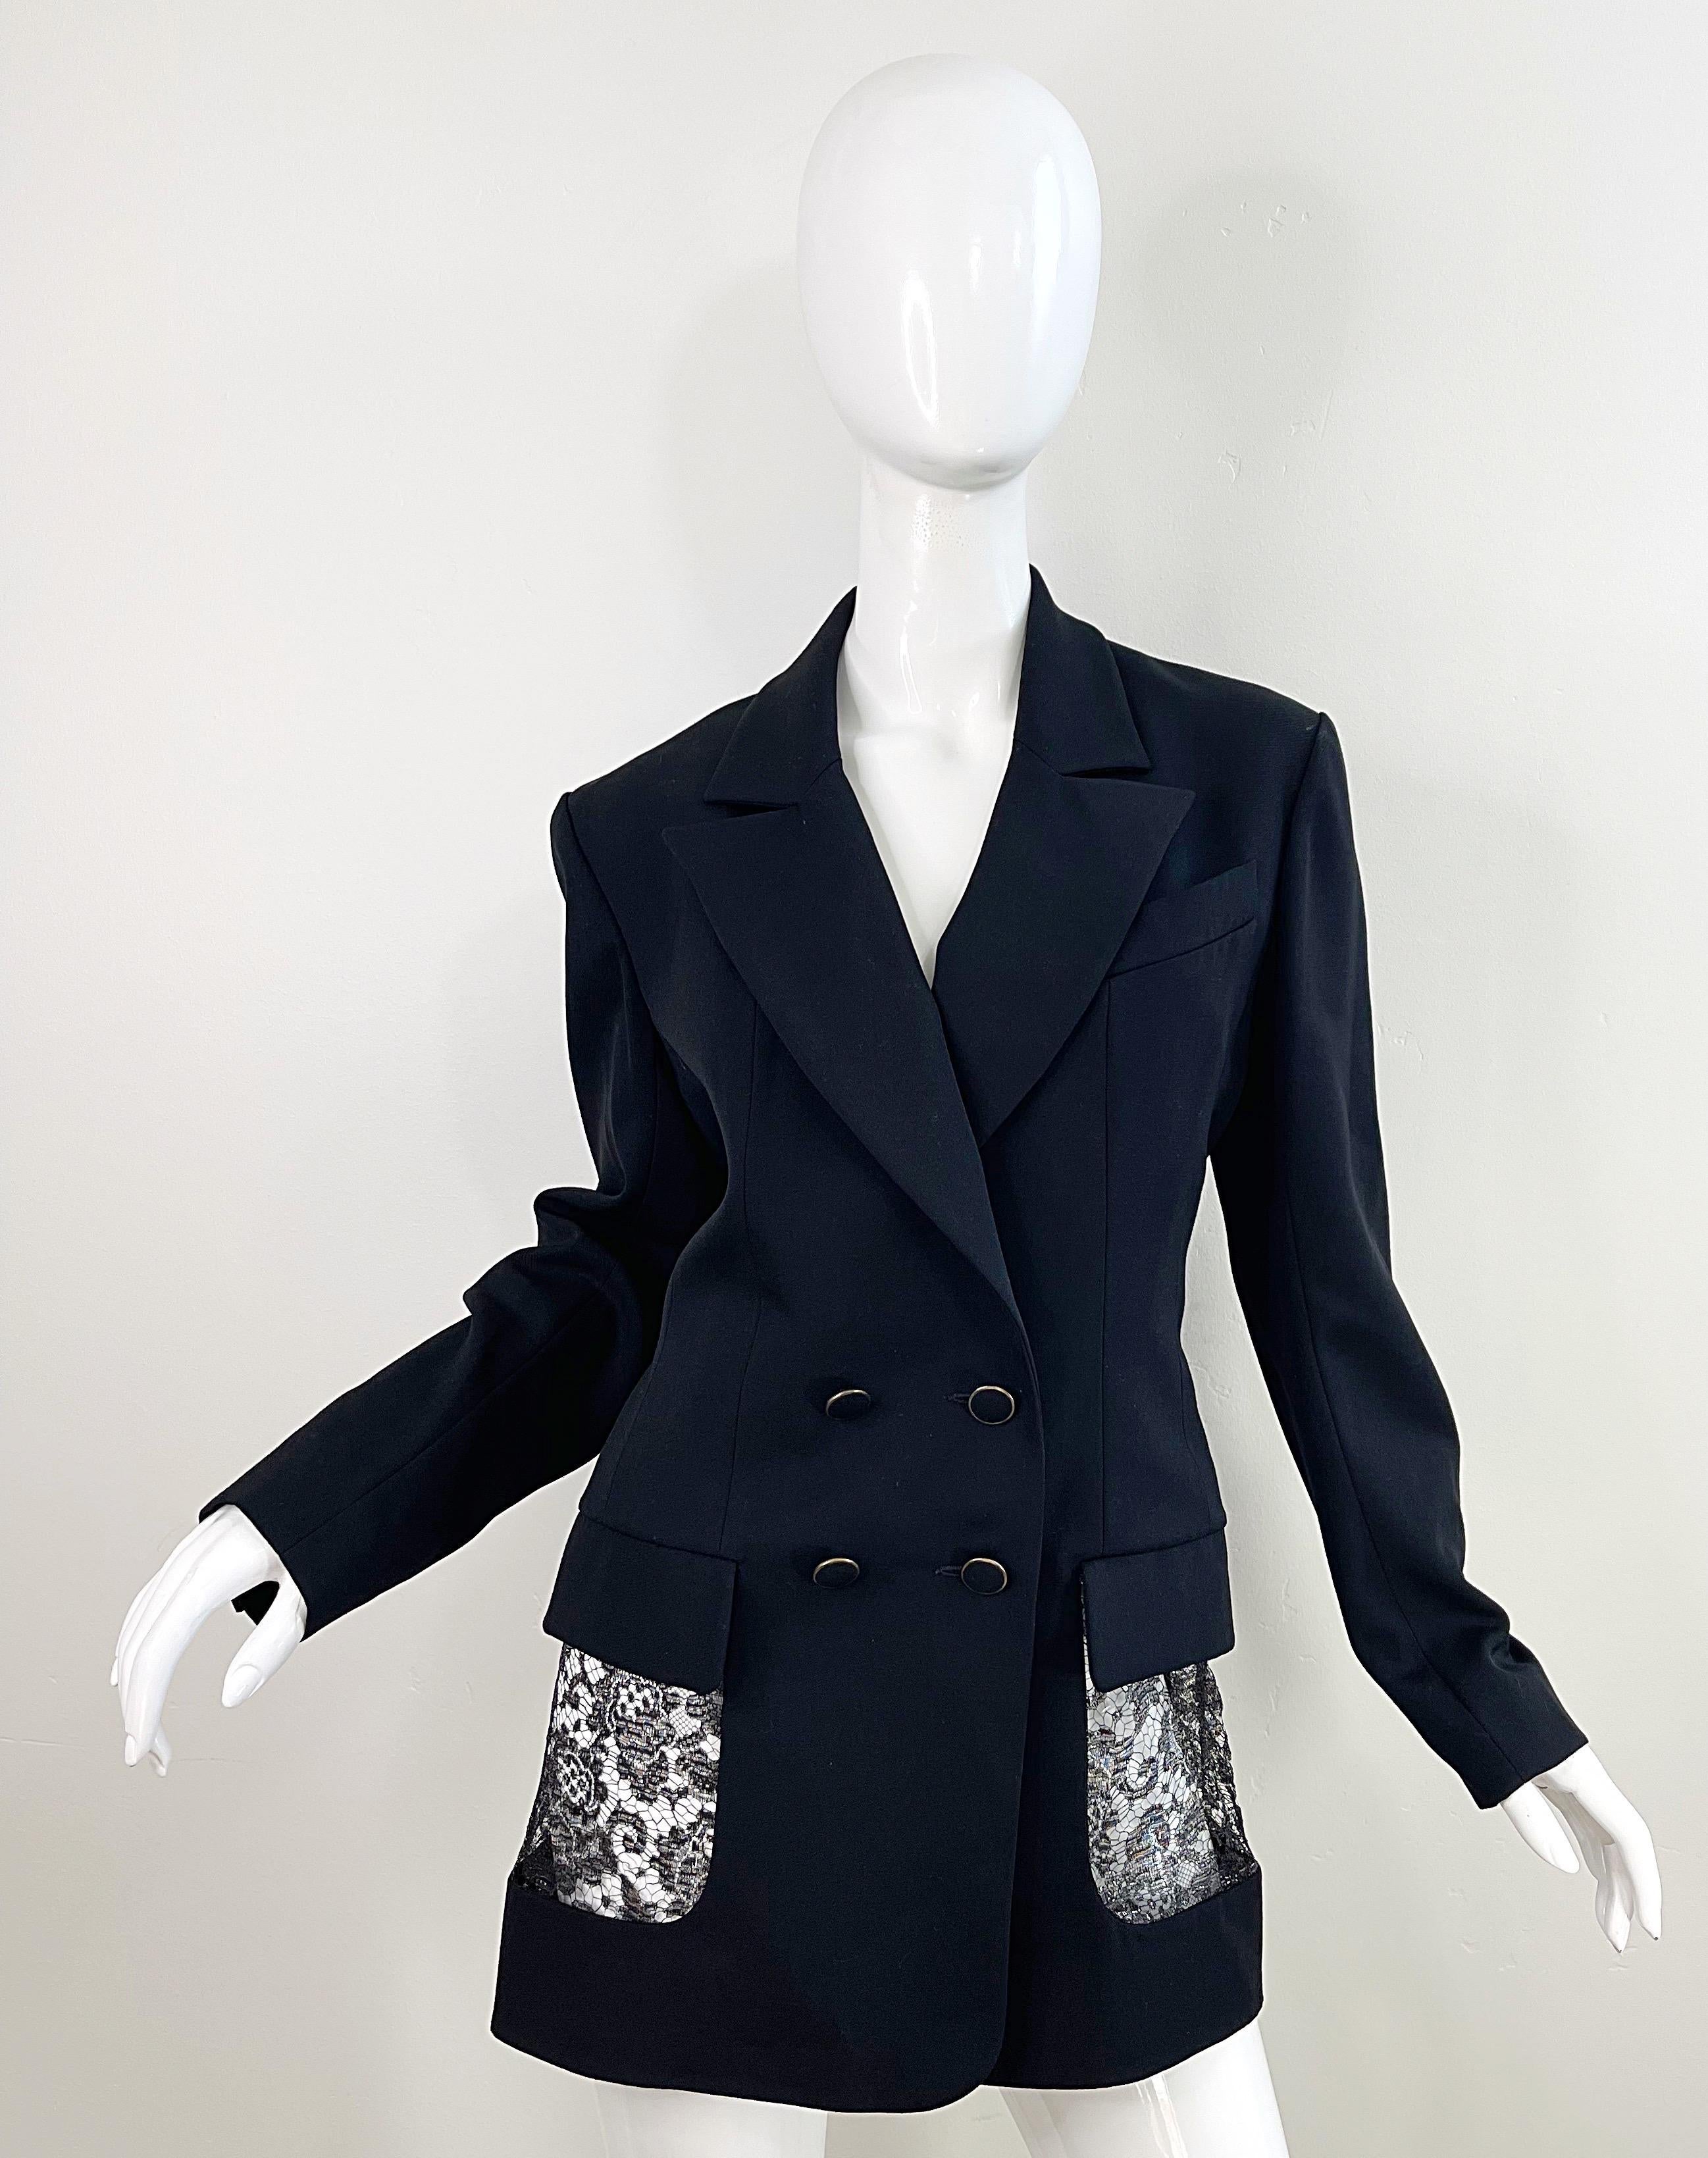 Karl Lagerfeld 1980s Black Lace Cut - Out Size 44 / 10 12 Vintage Dress + Jacket For Sale 1